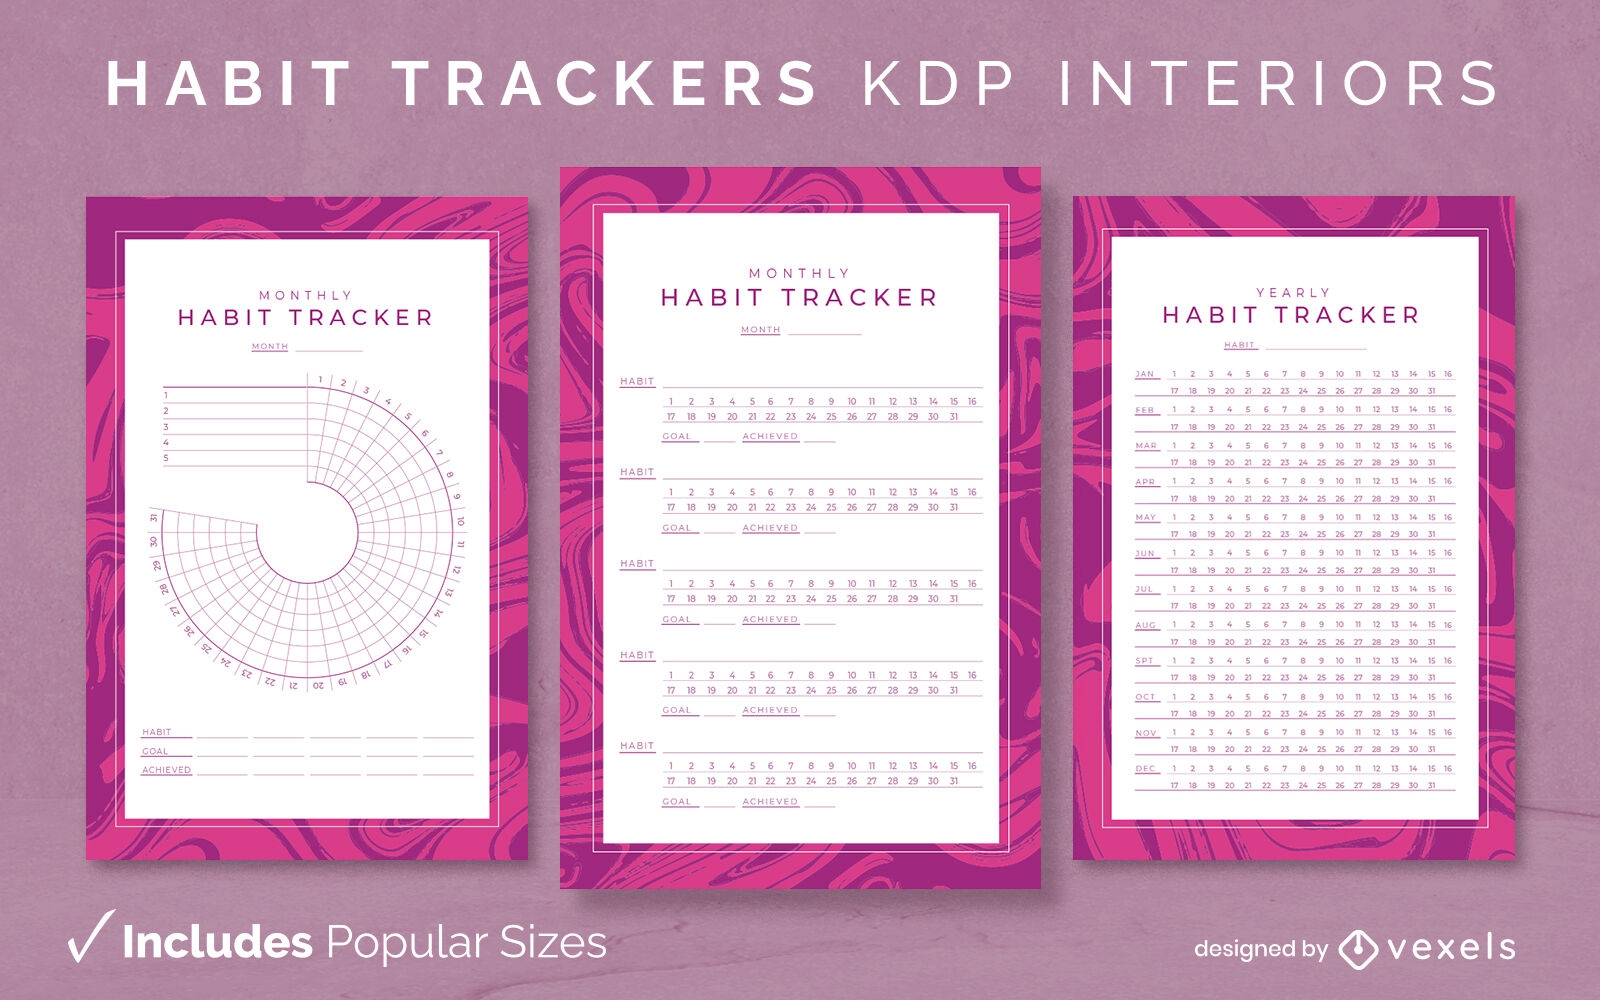 Abstract habit tracker journal template KDP interior design